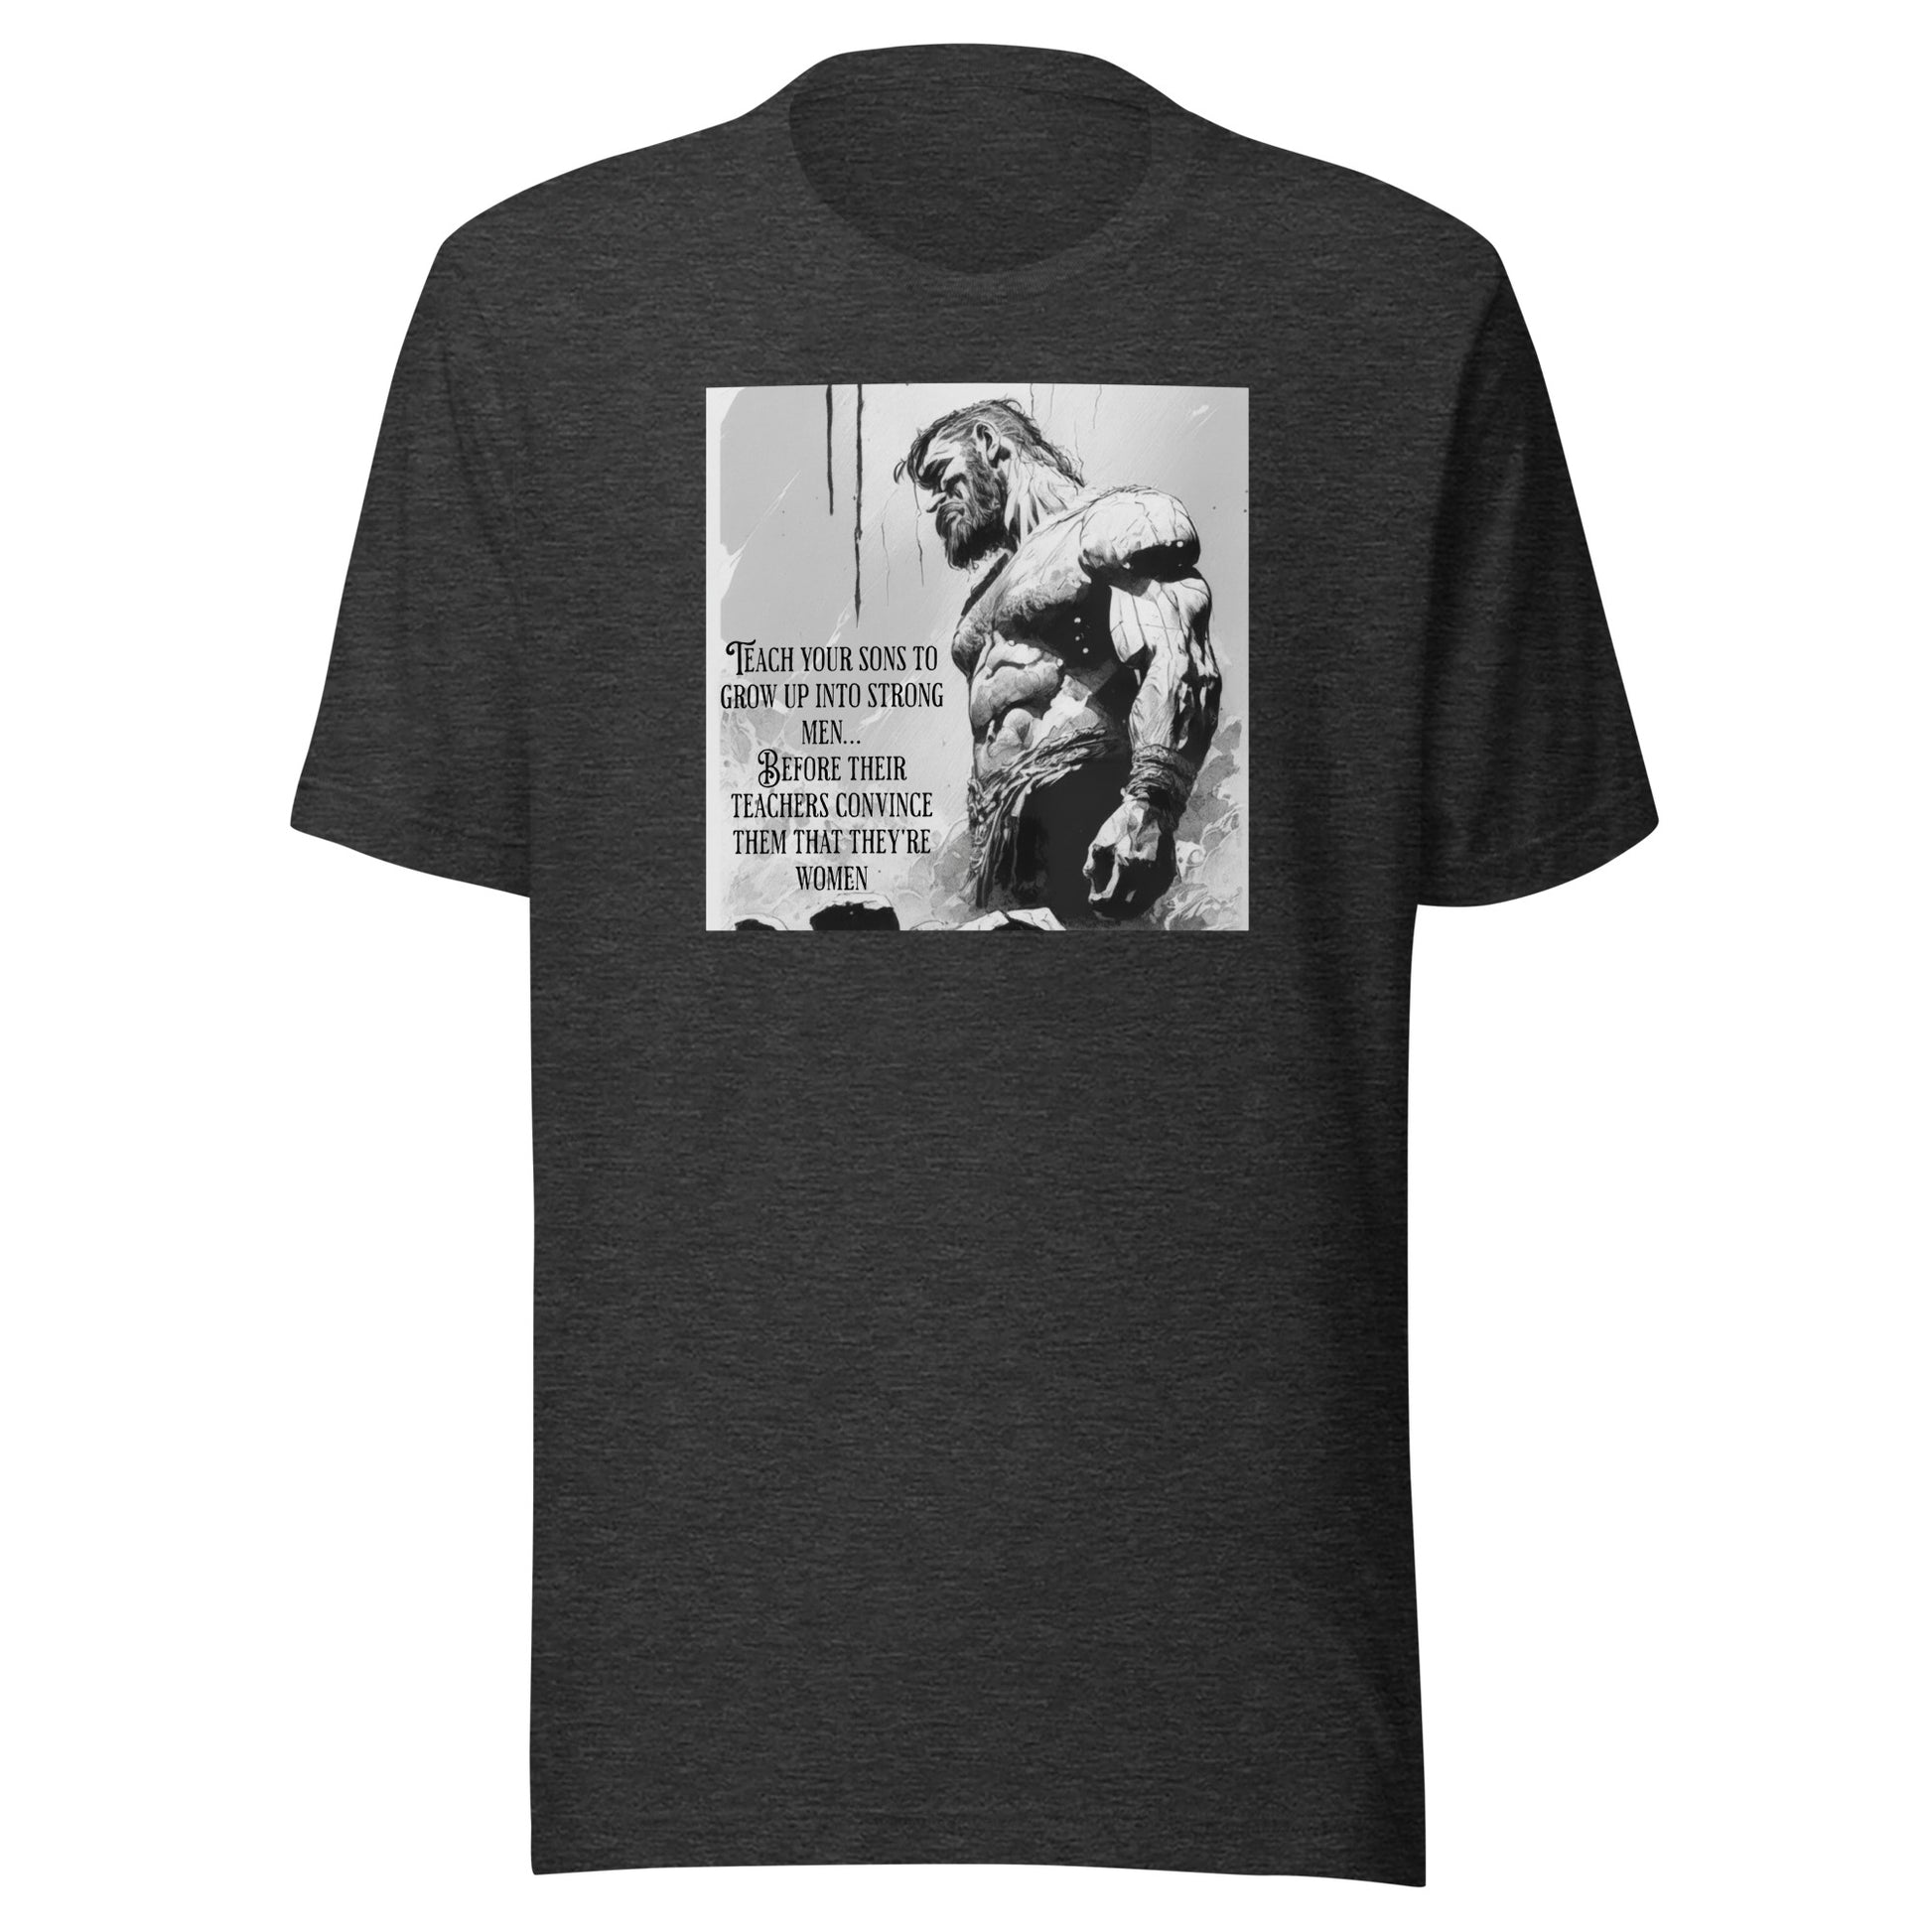 Raise Strong Men Graphic Men's T-Shirt Dark Grey Heather